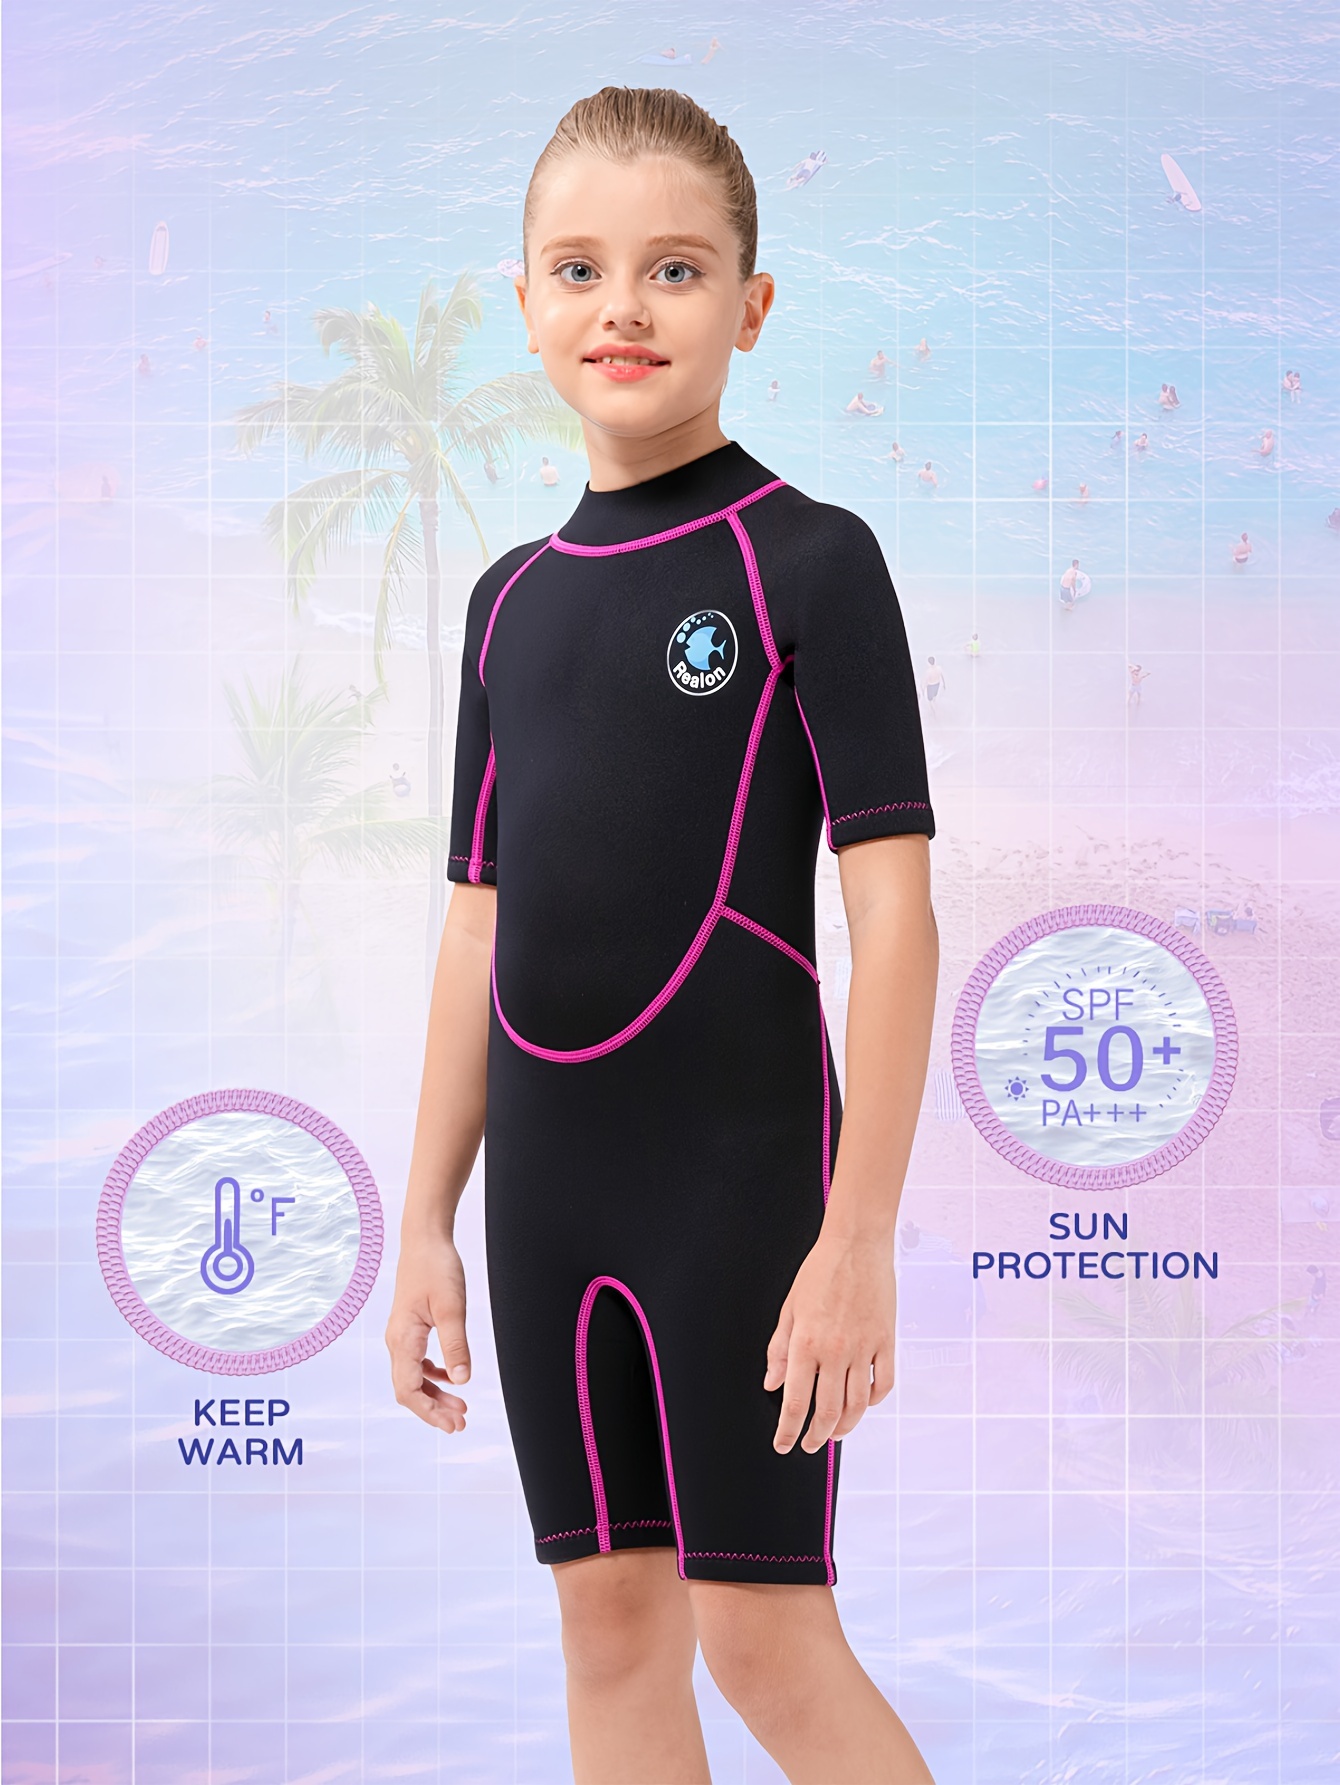 REALON Wetsuit Kids for Boys/Girls One Piece Wet Suit 2mm Neoprene